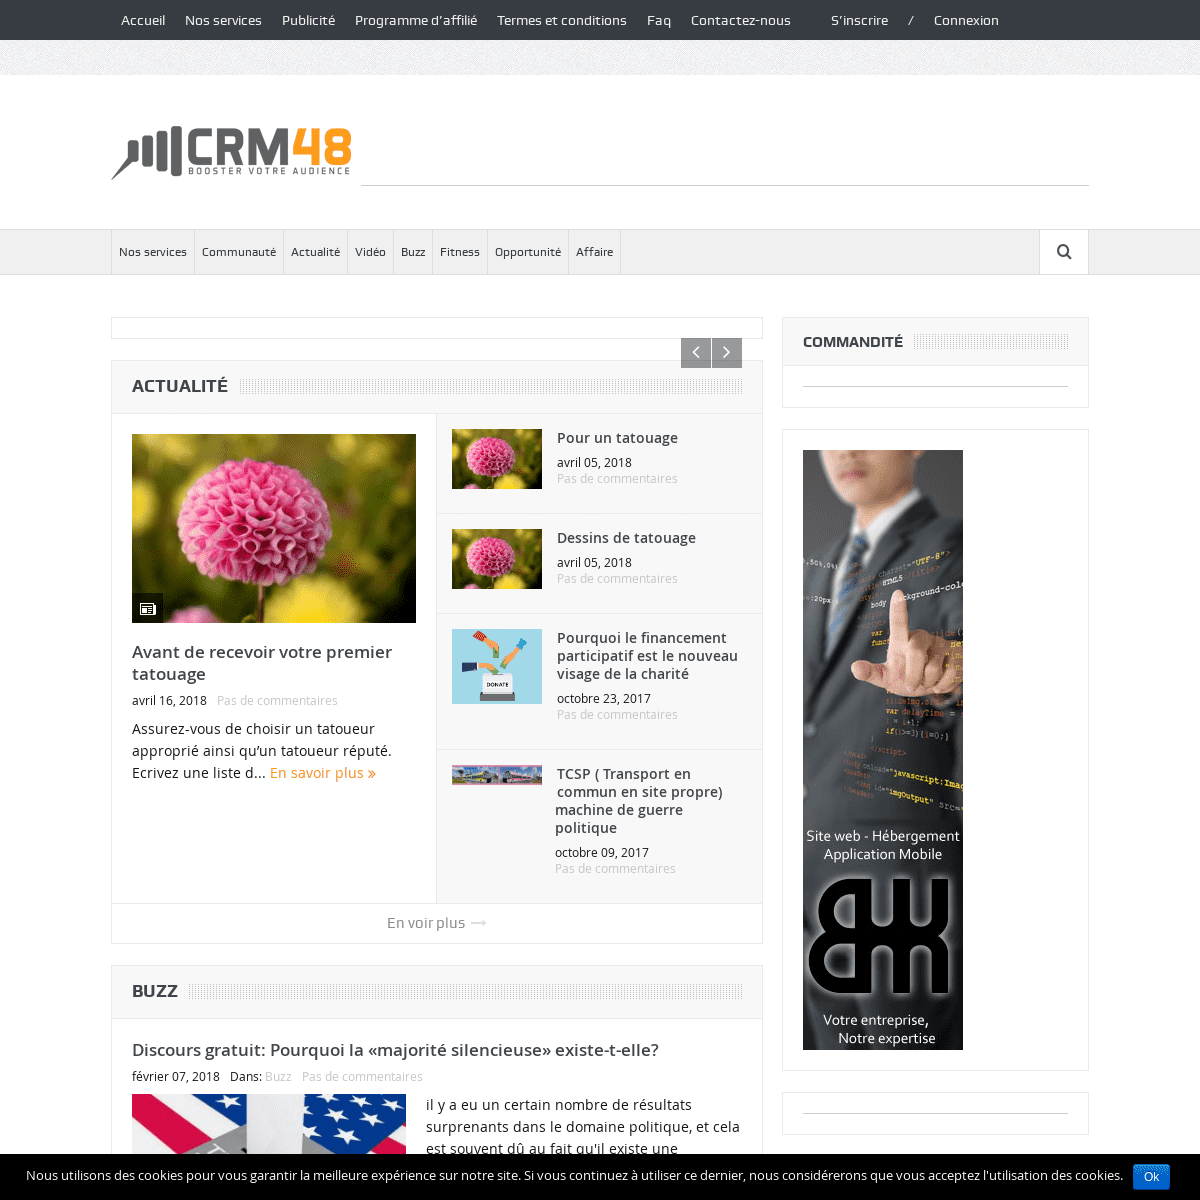 A complete backup of crm48.com